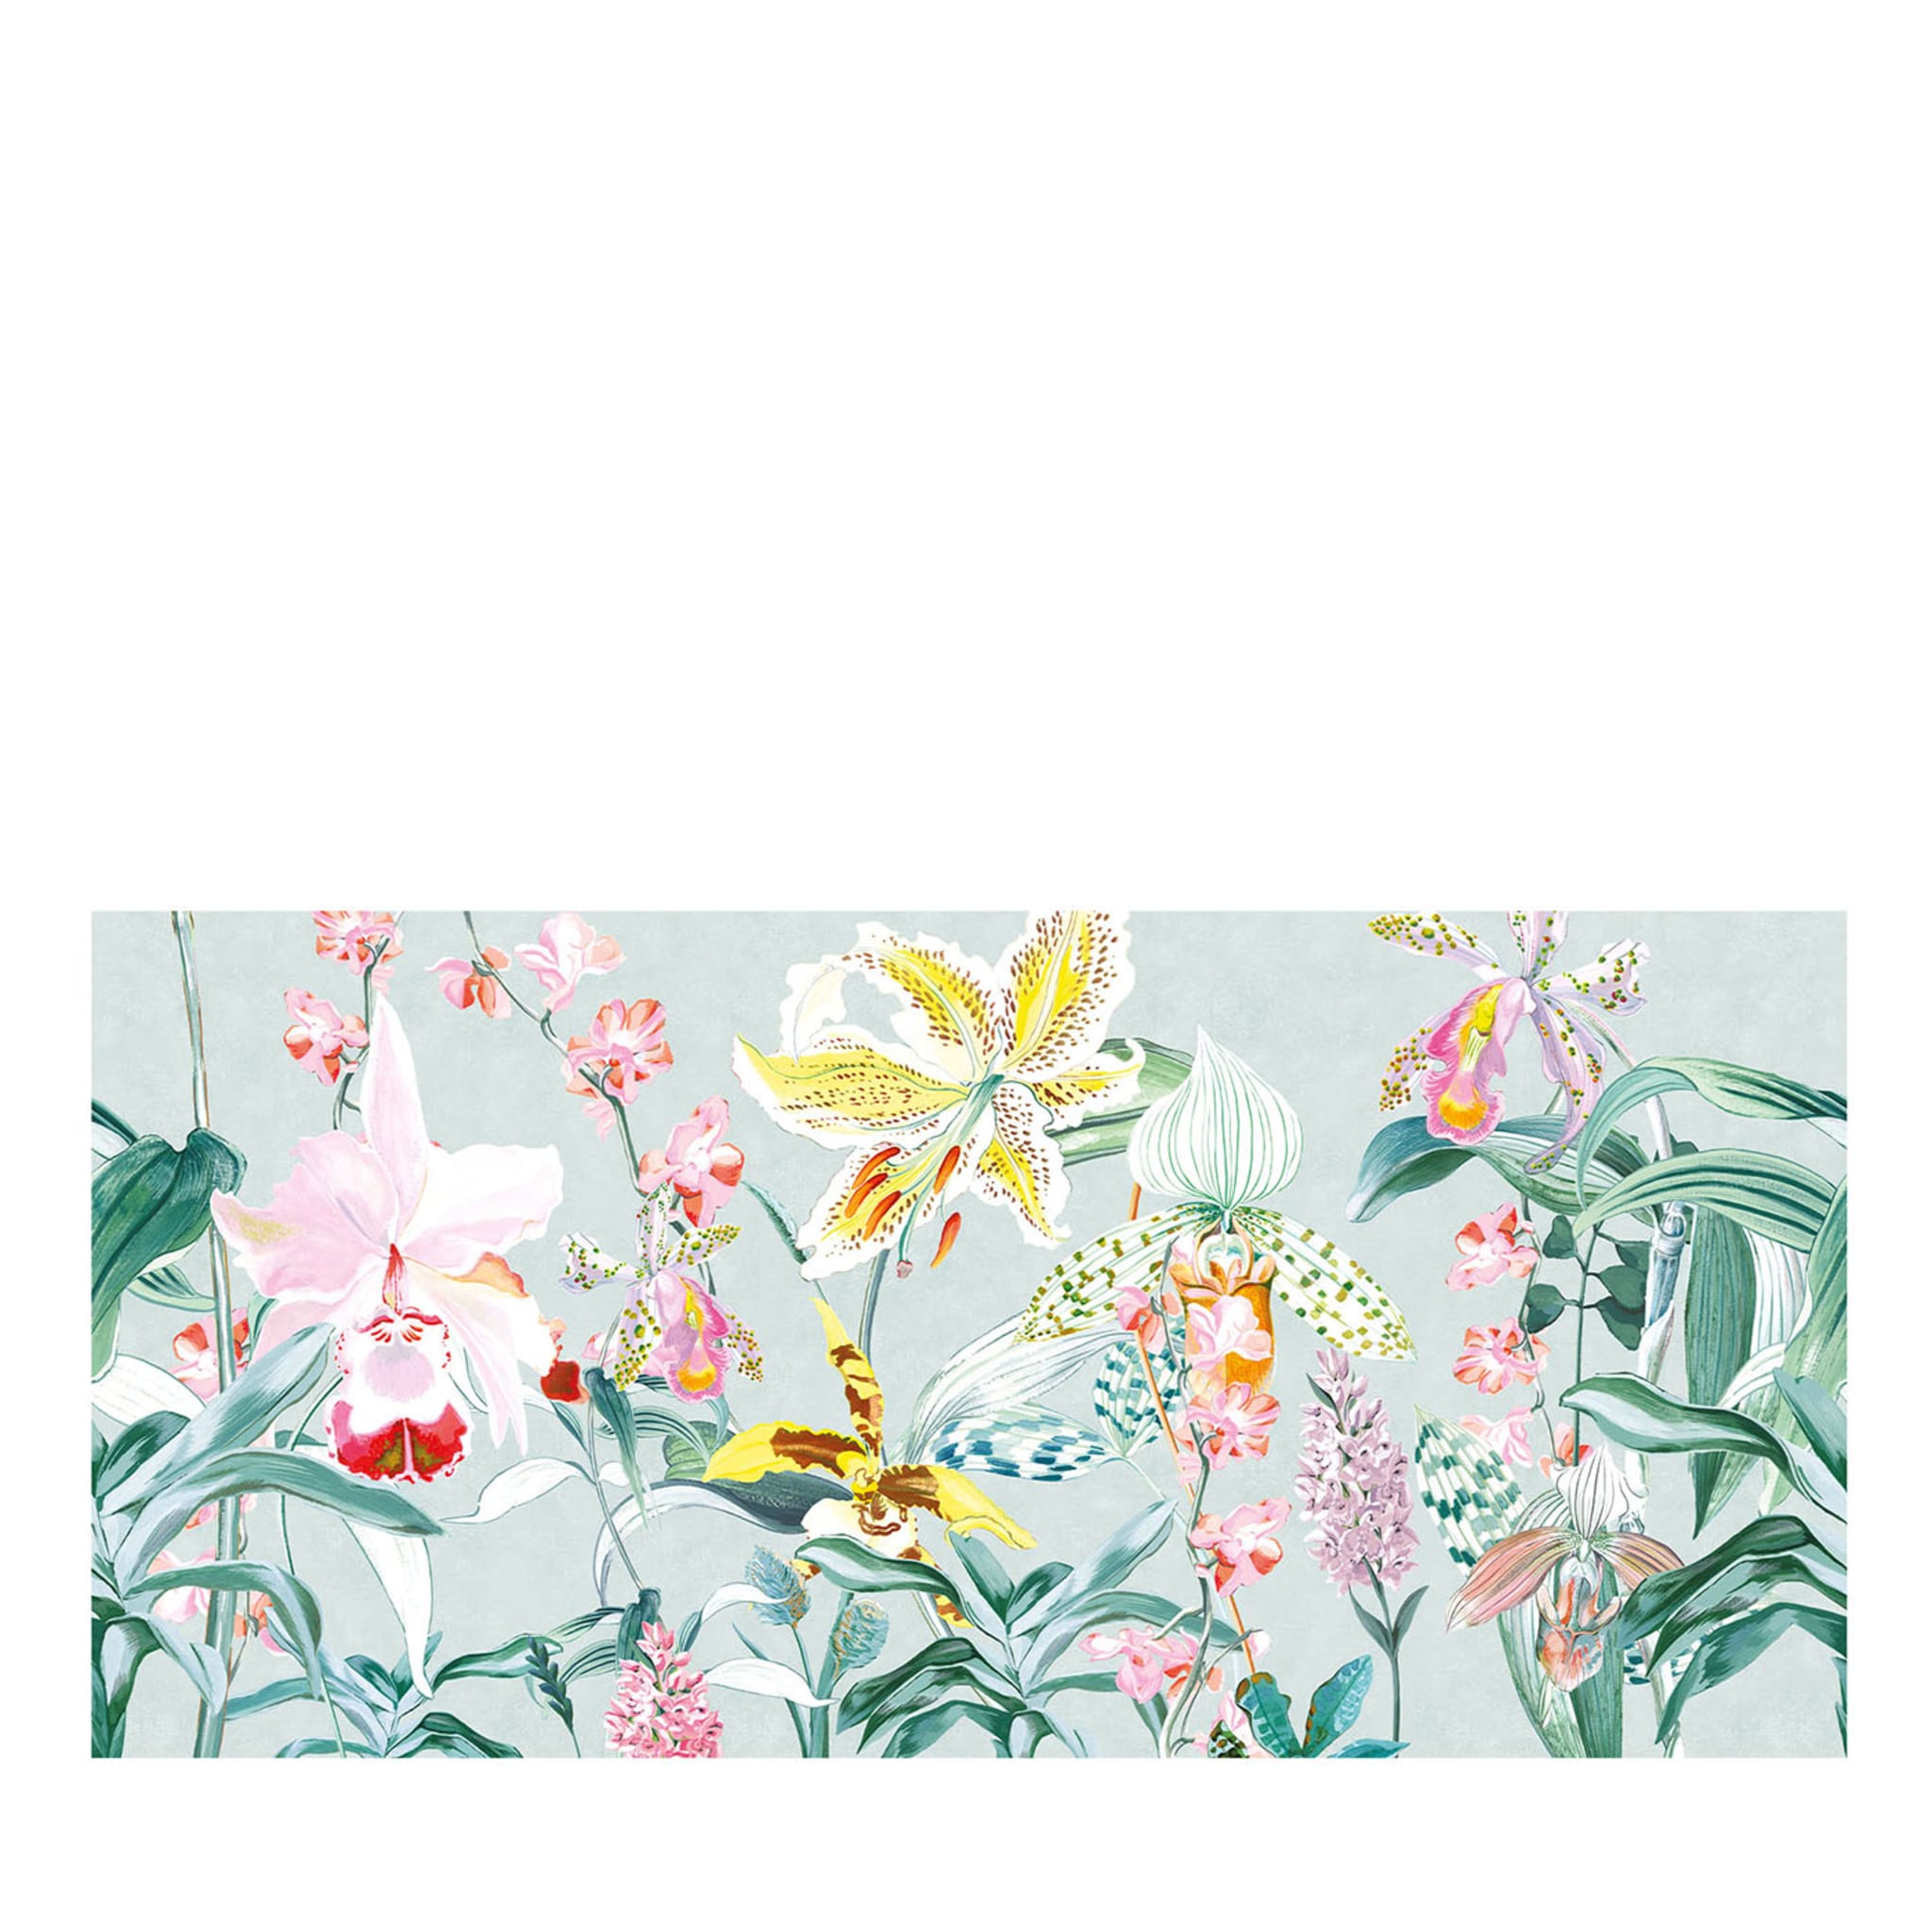 Aqua Orchid Panorama Macro Wallpaper Camere Collection - Main view